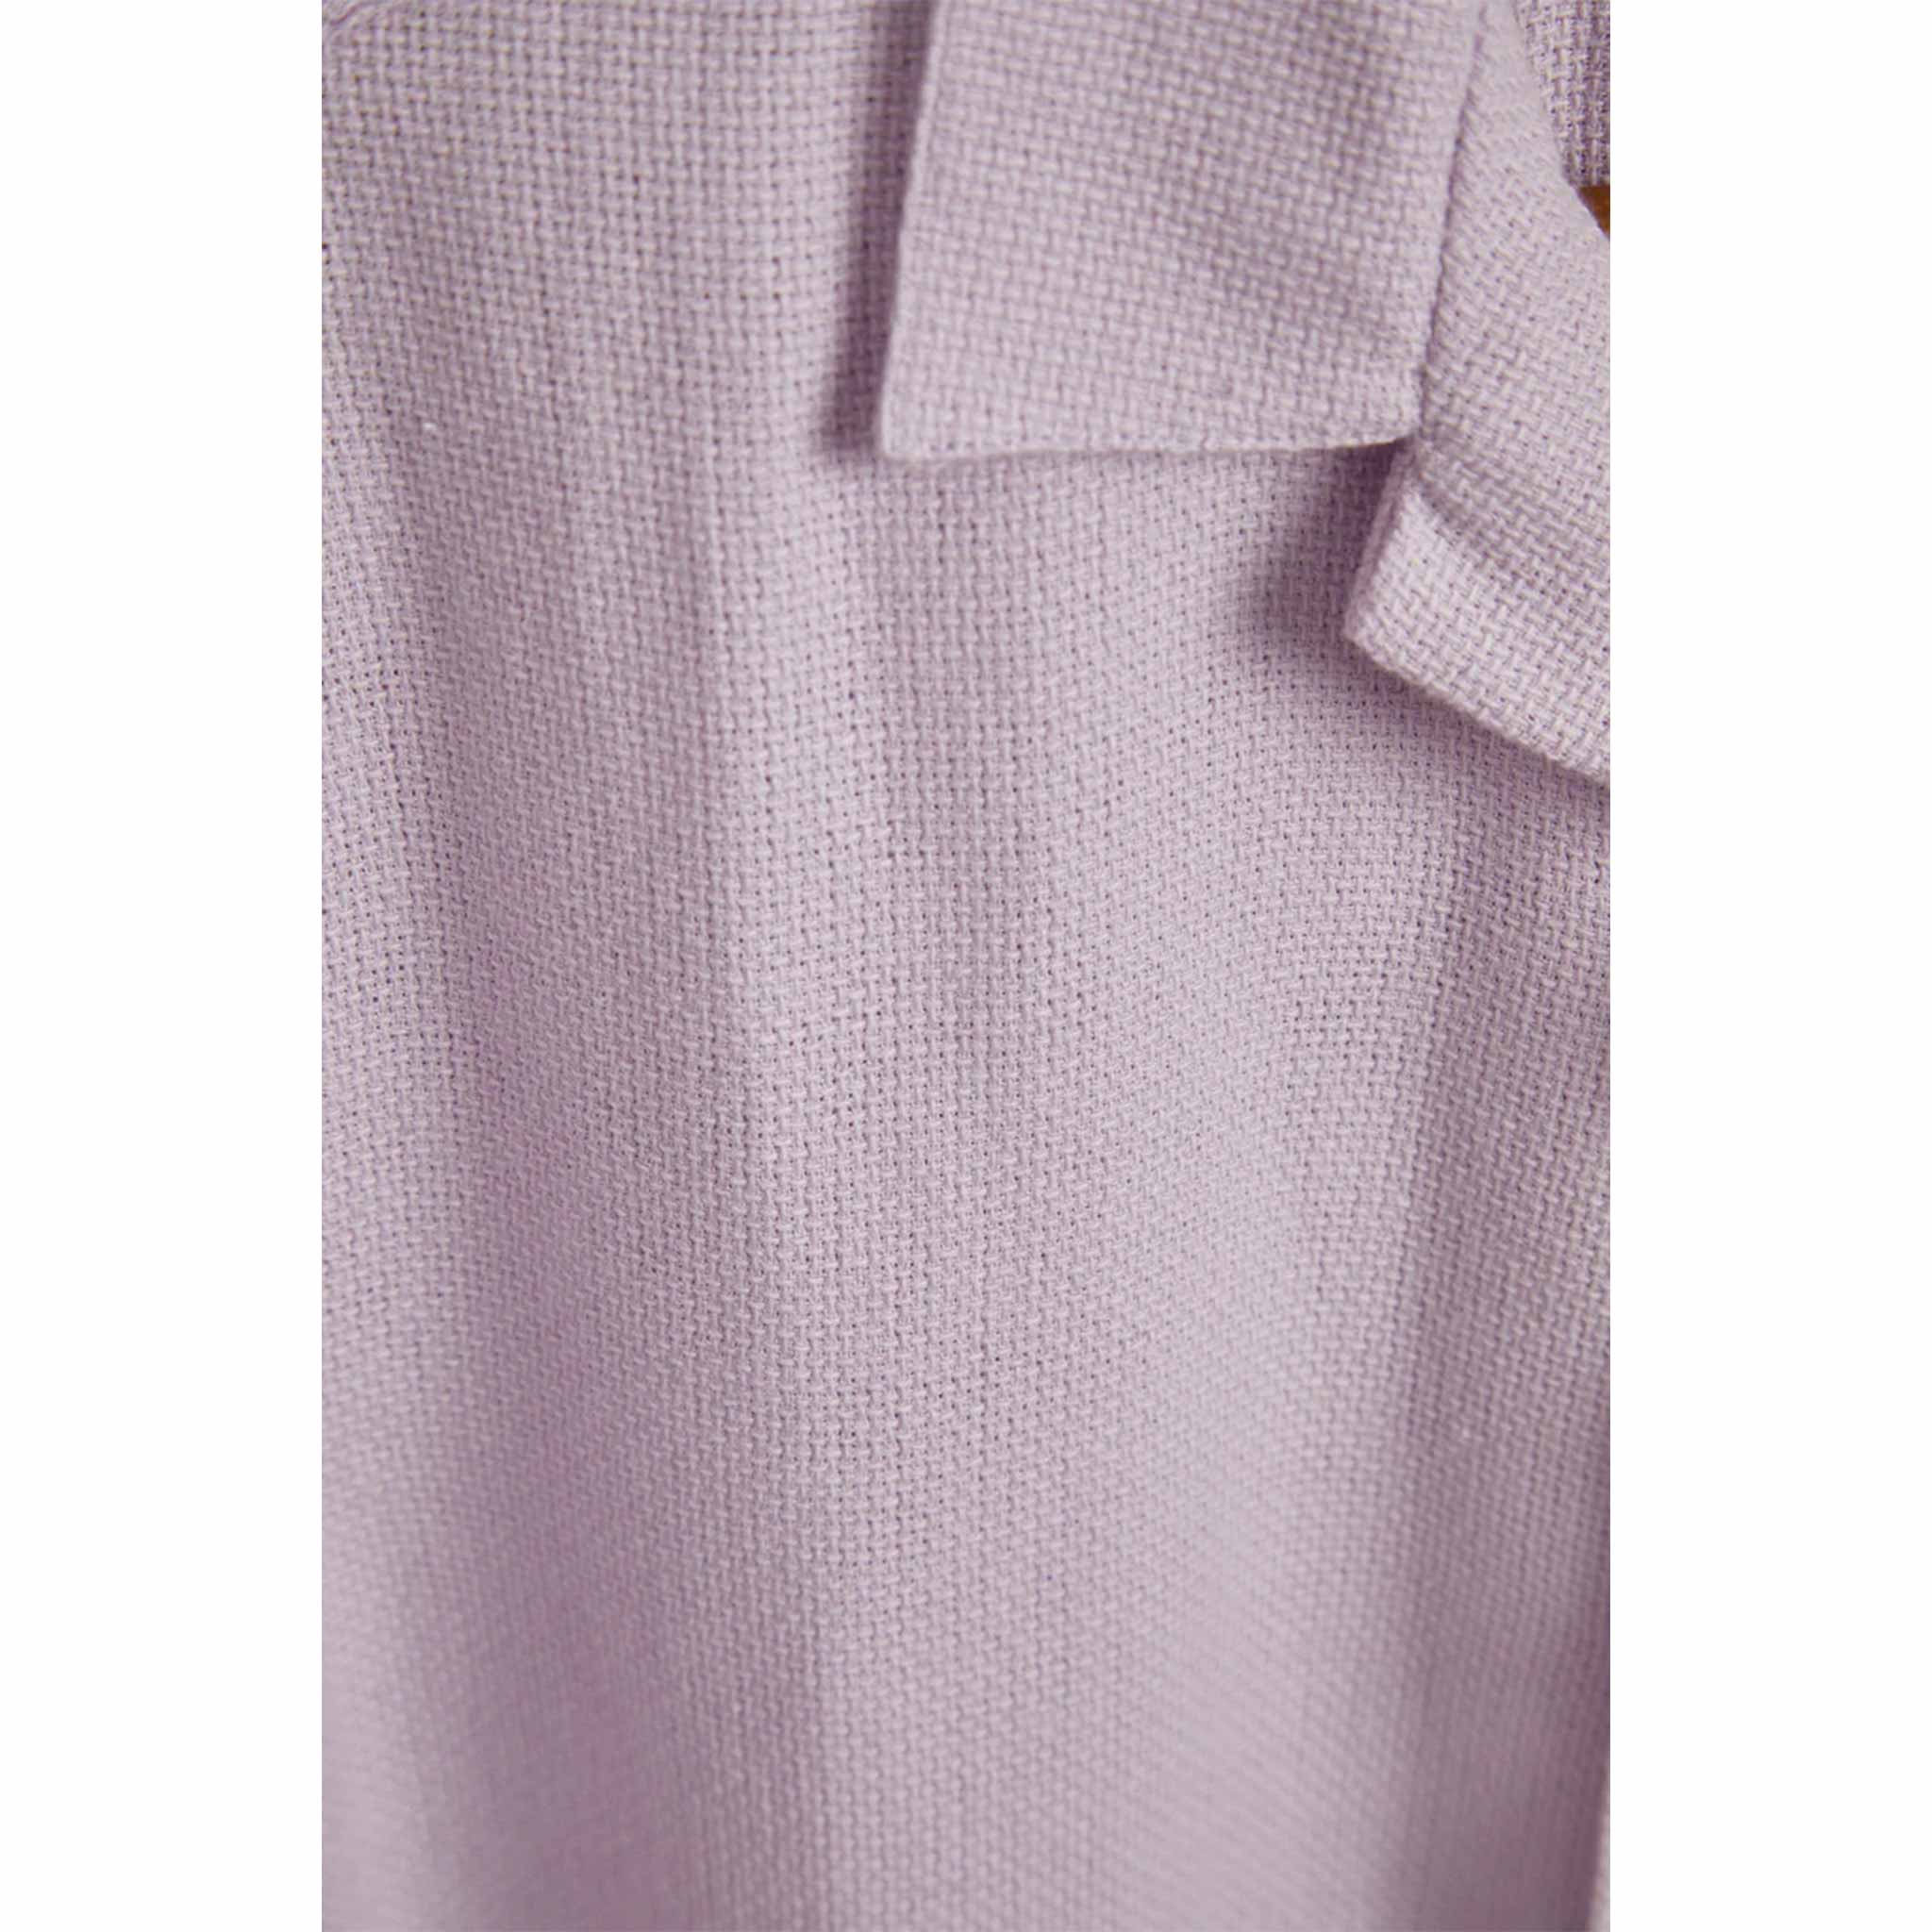 Pique Shirt in Lavender